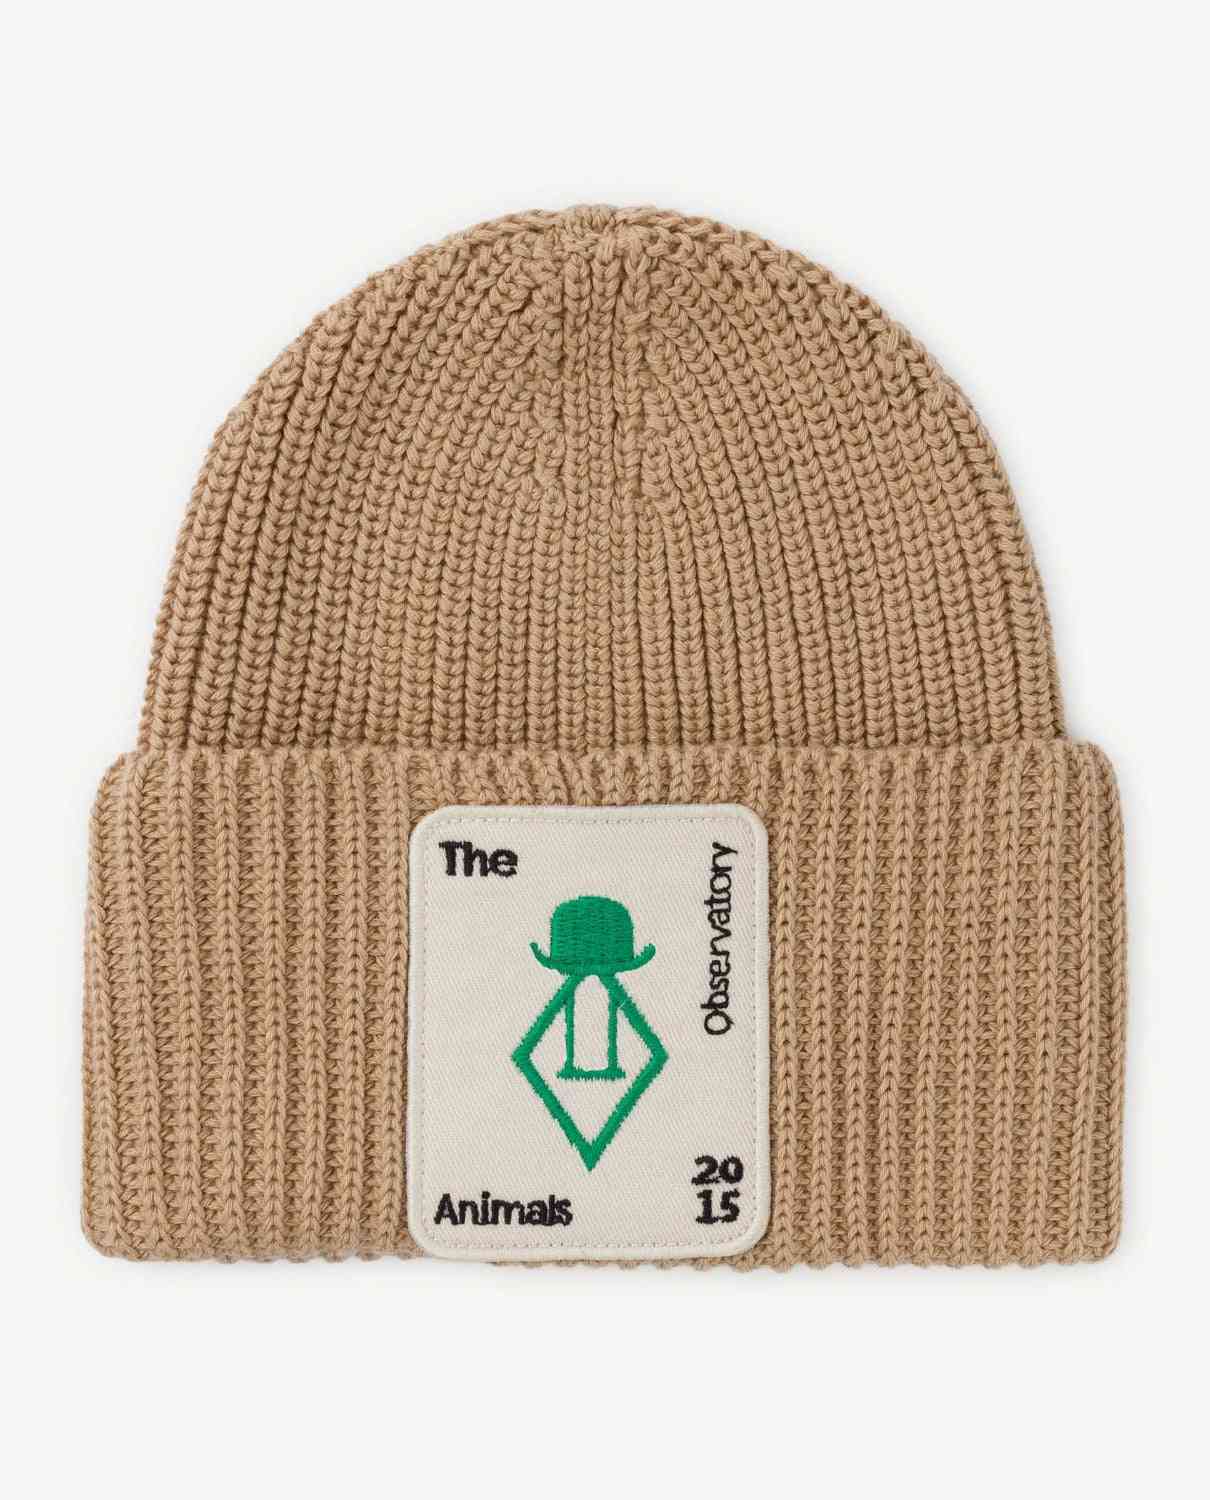 Baby Hats Autumn, Winter, Warm Knit Caps